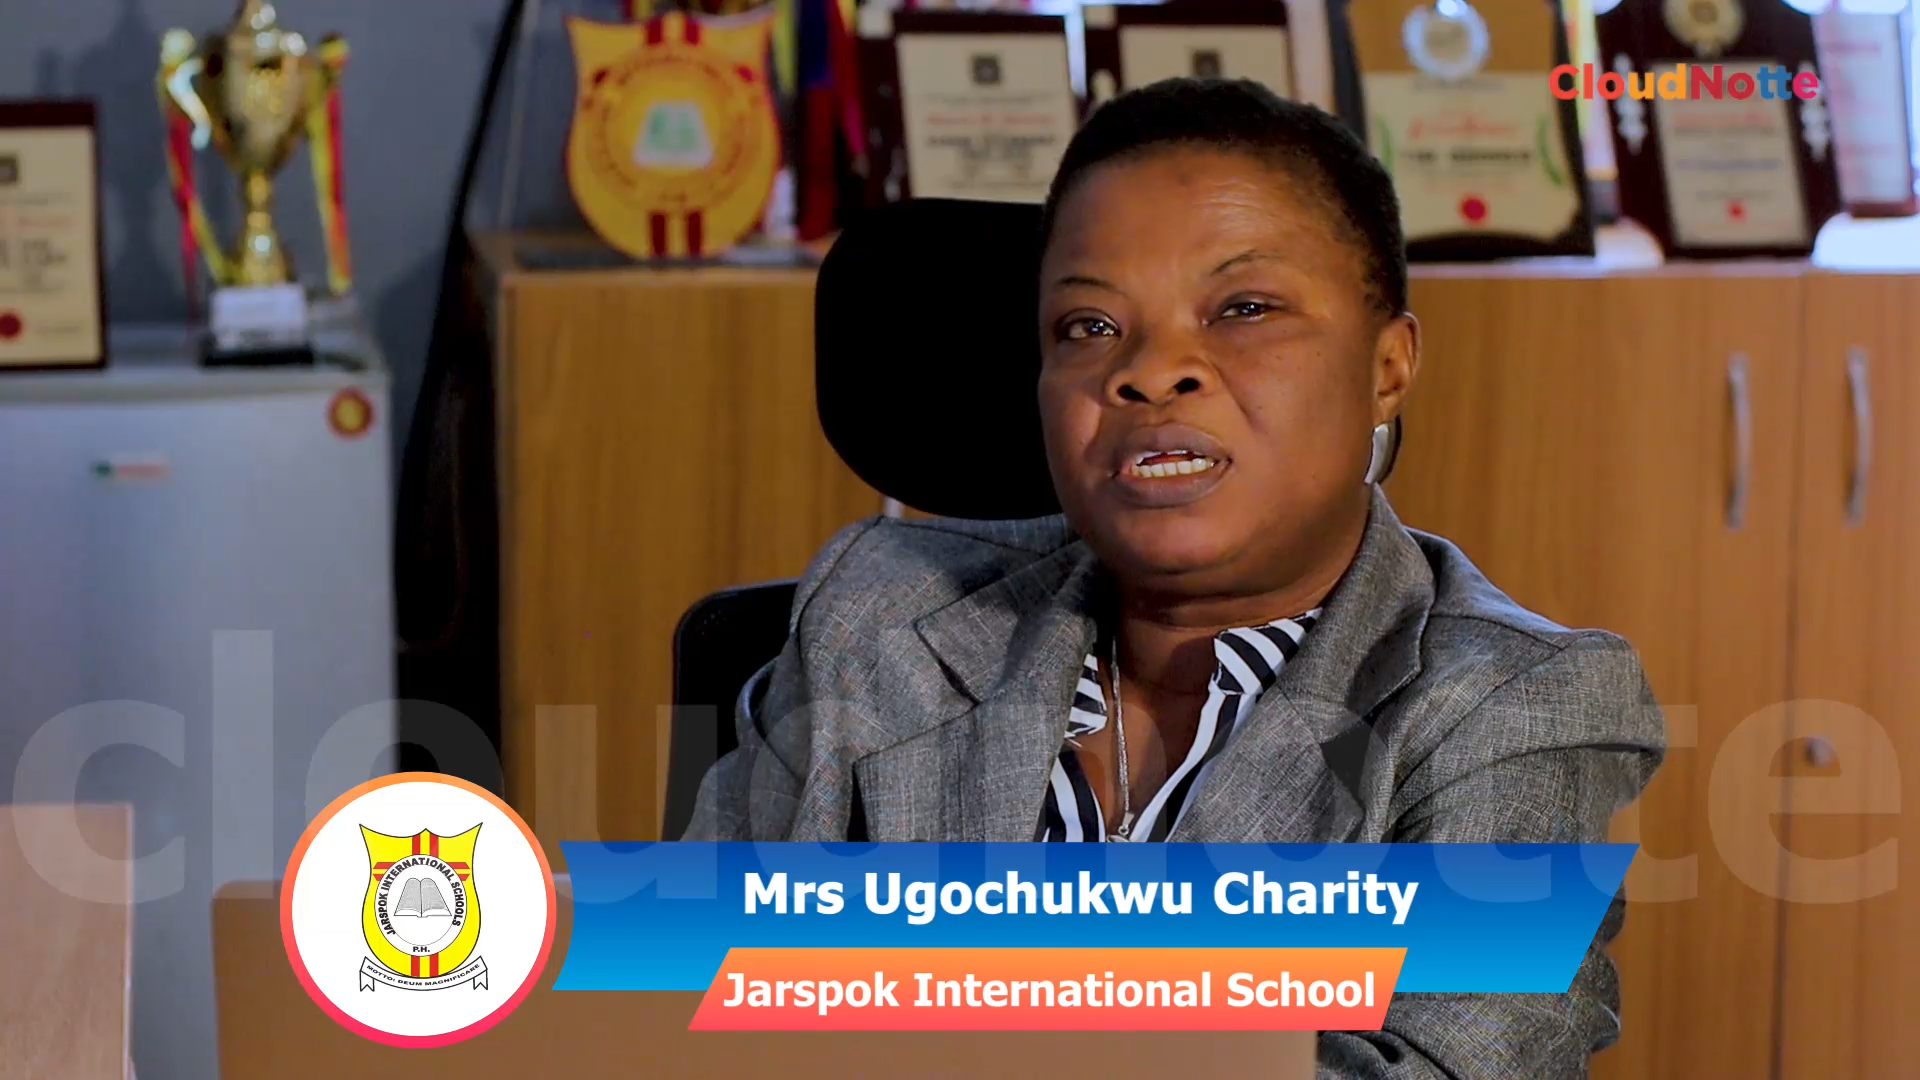 Jarspok International School